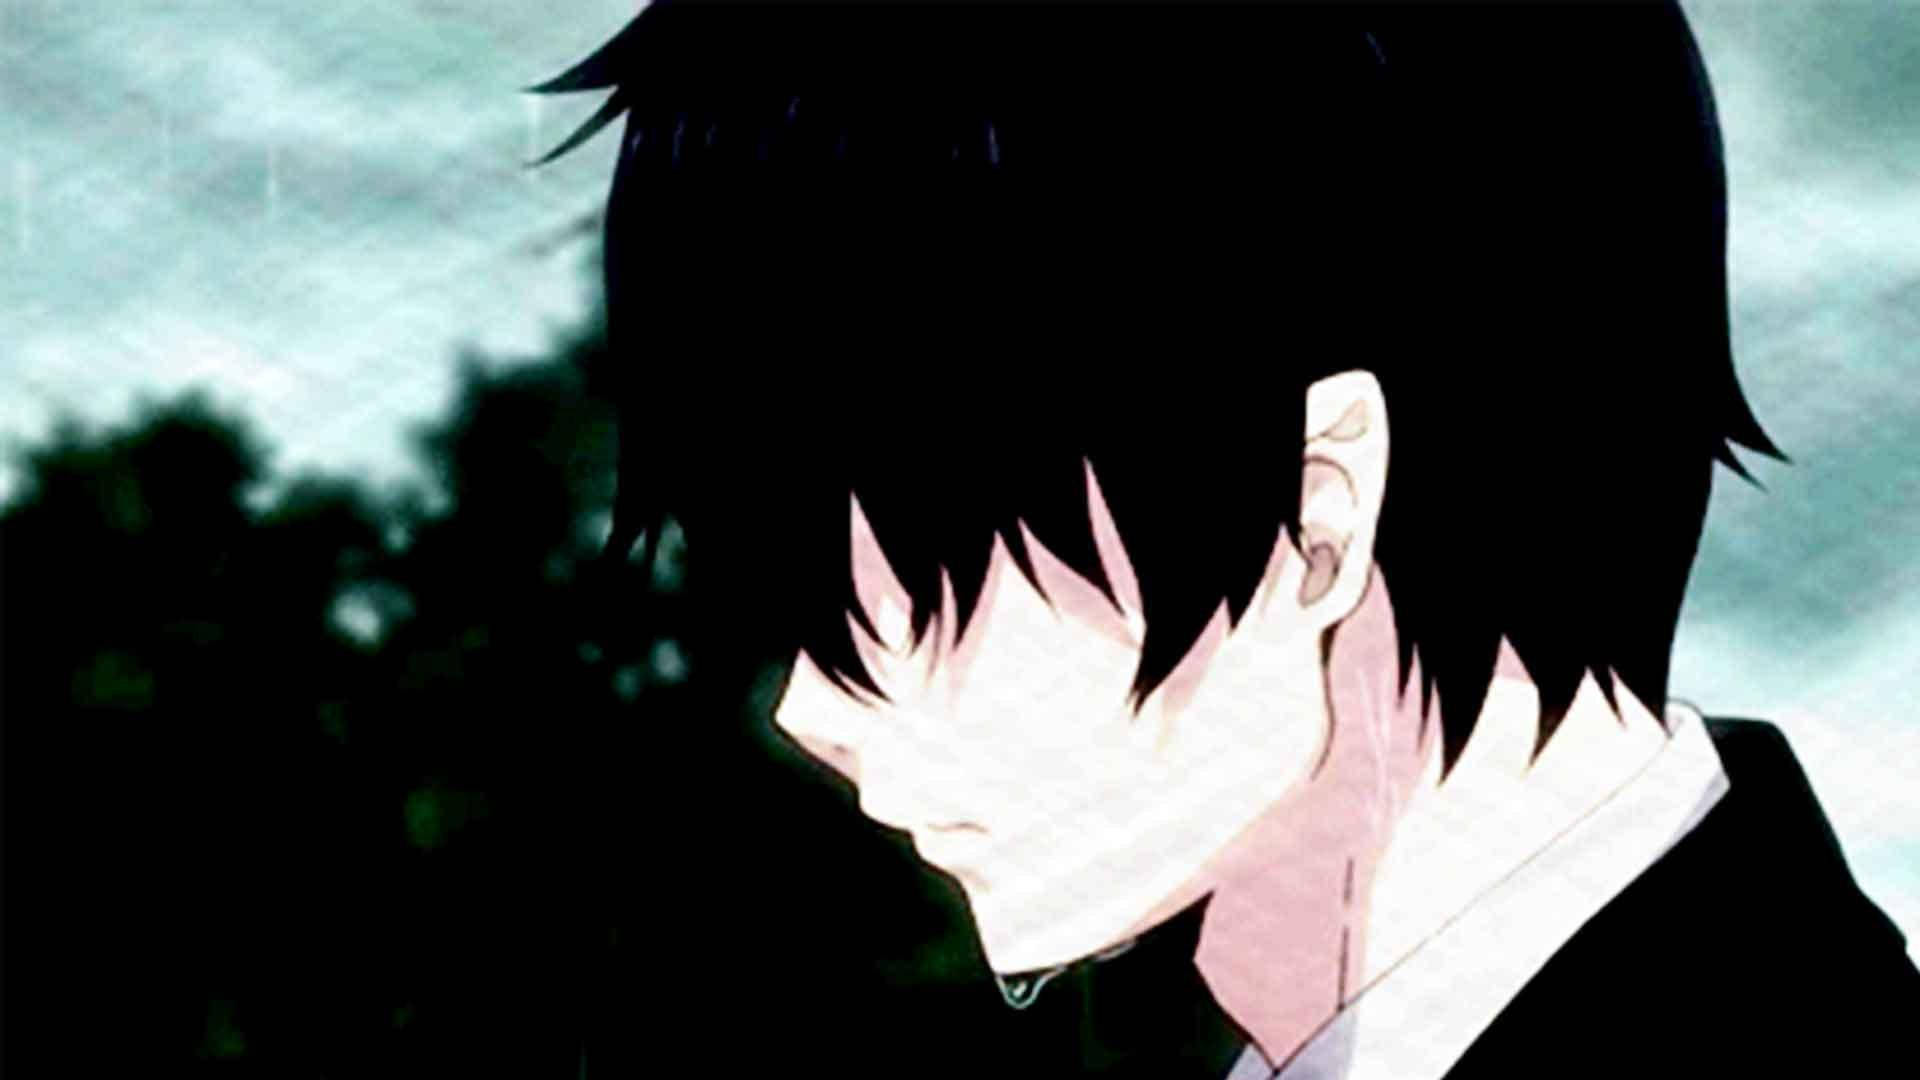 Sobbing Sad Anime Boy Wallpaper